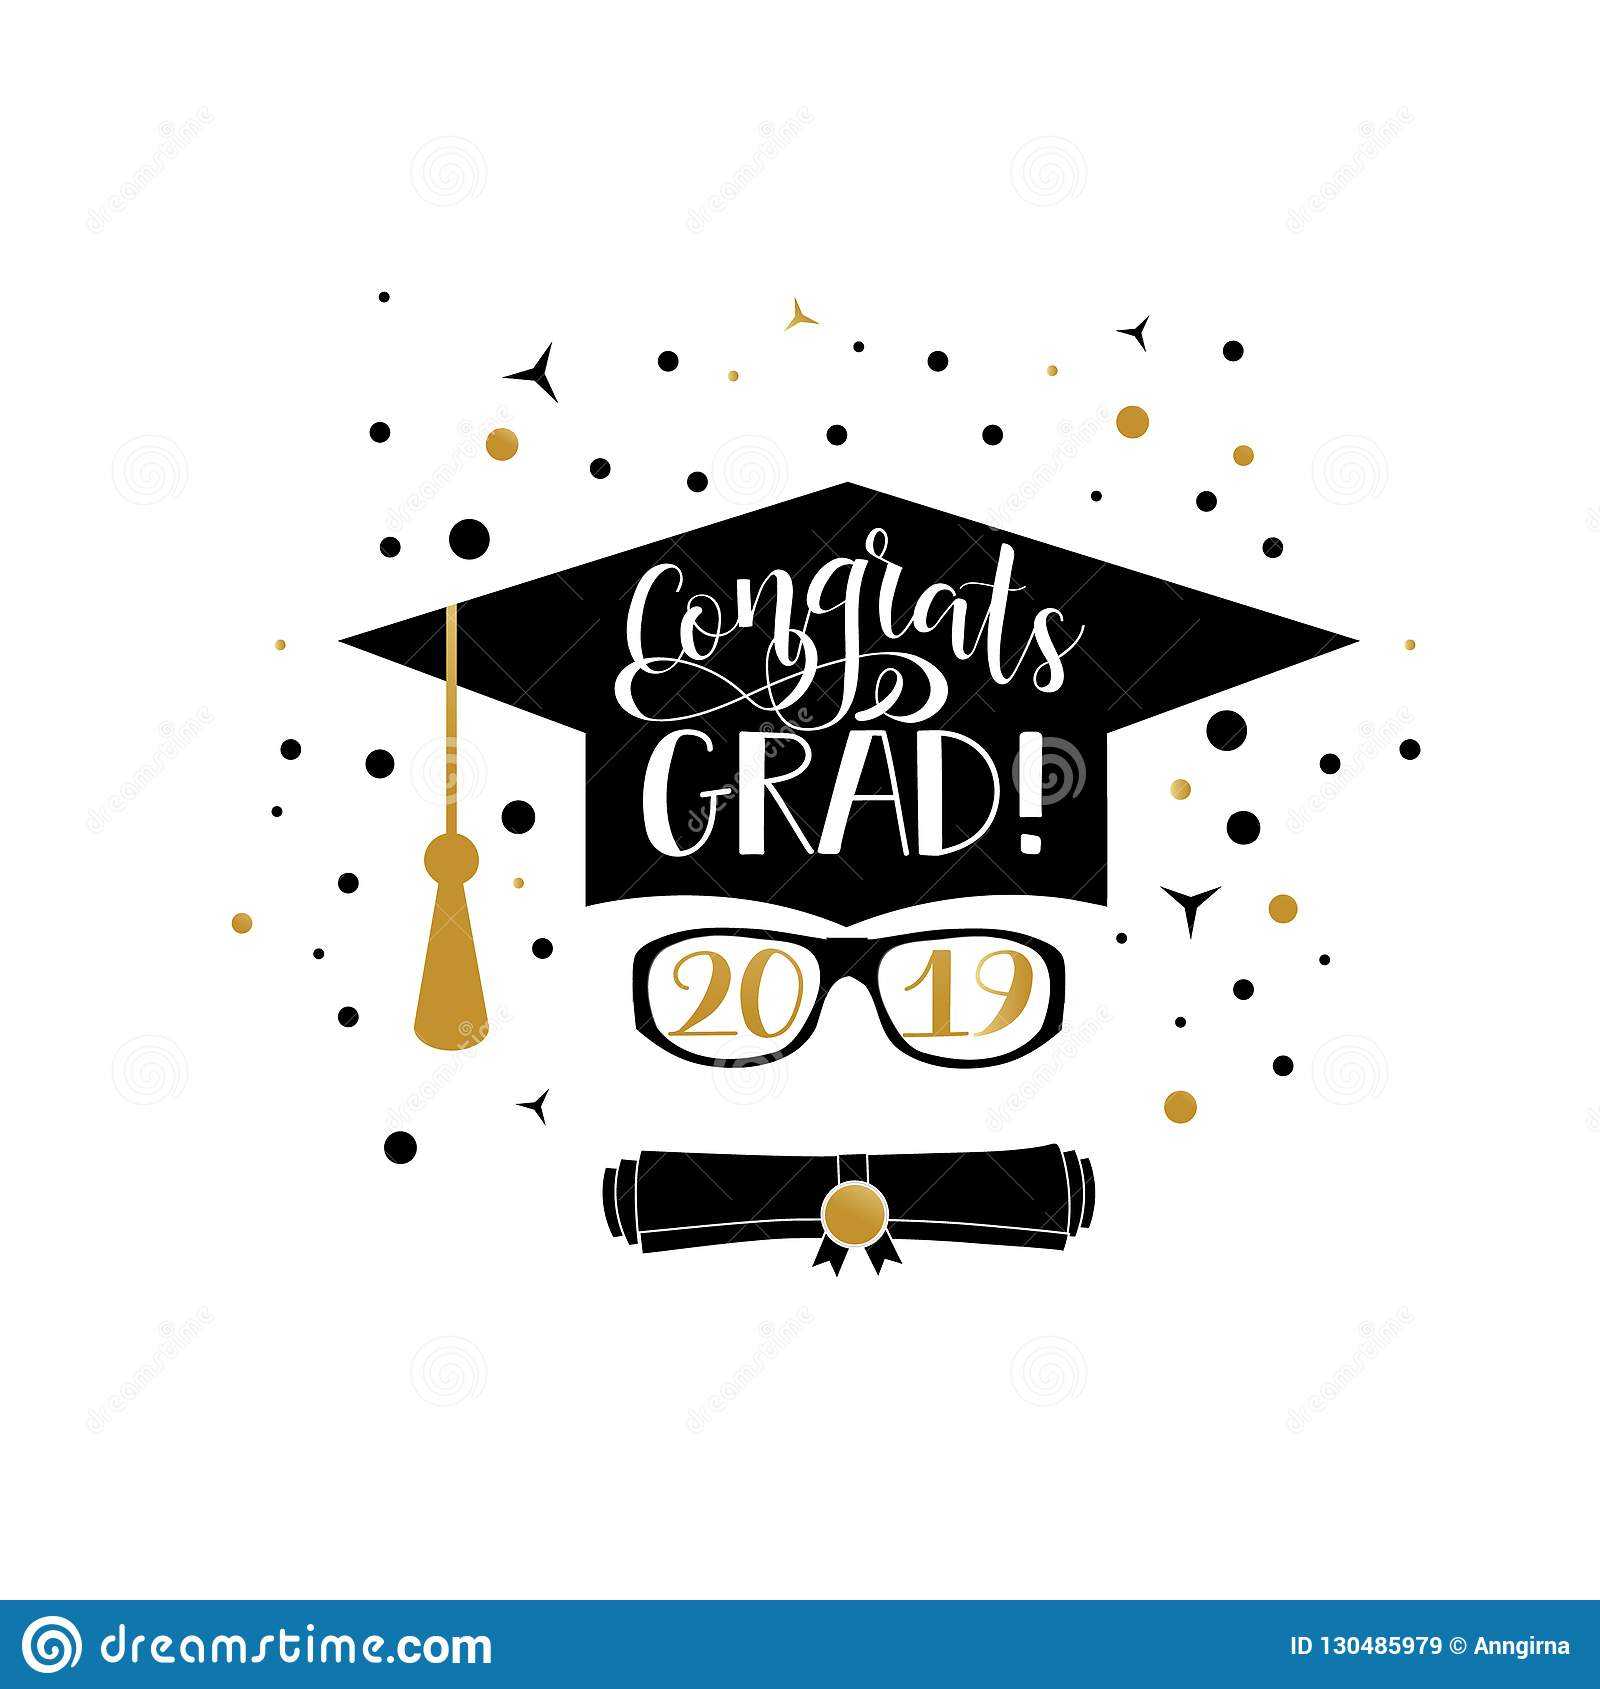 Congrats Grad 2019 Lettering. Congratulations Graduate With Graduation Banner Template